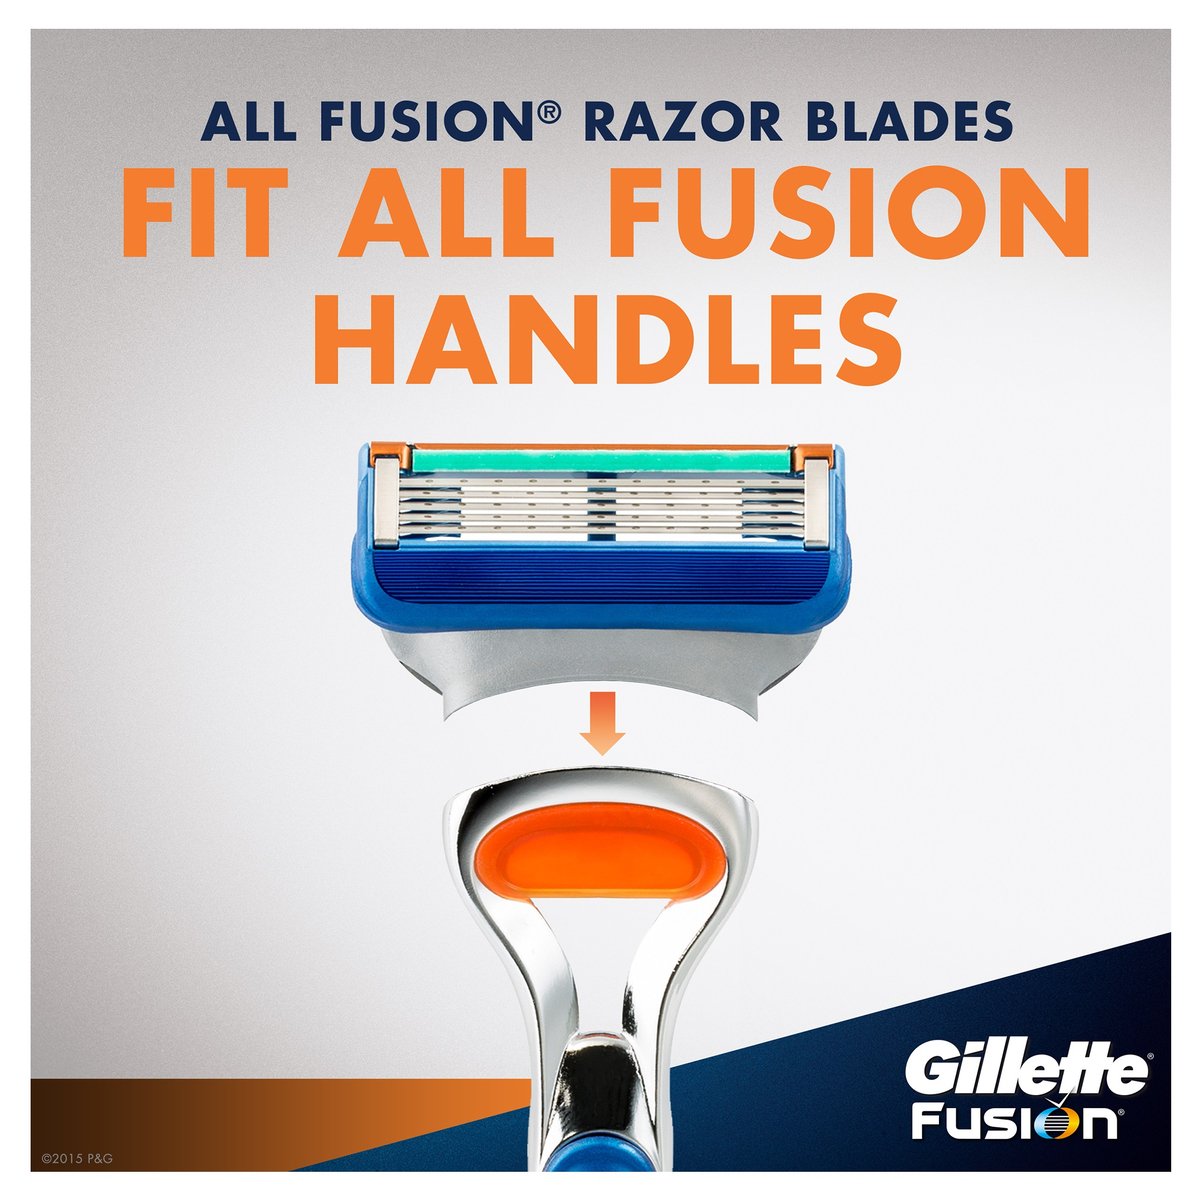 Gillette Fusion 5 Men's Razor Blades Refills 2 pcs